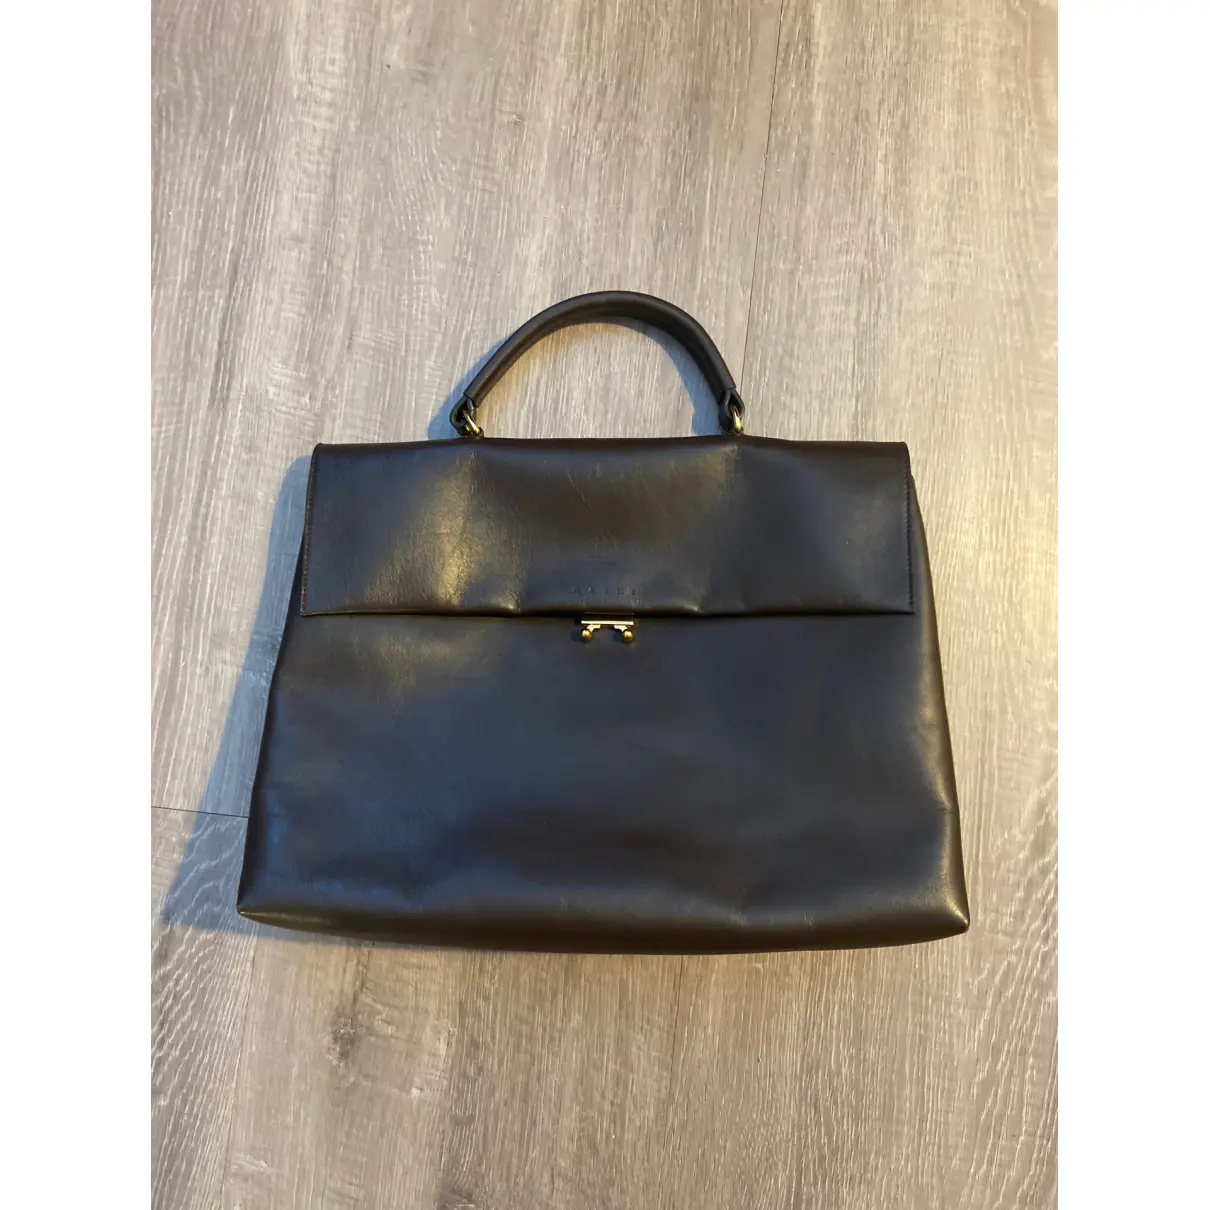 Buy Marni Trunk leather handbag online